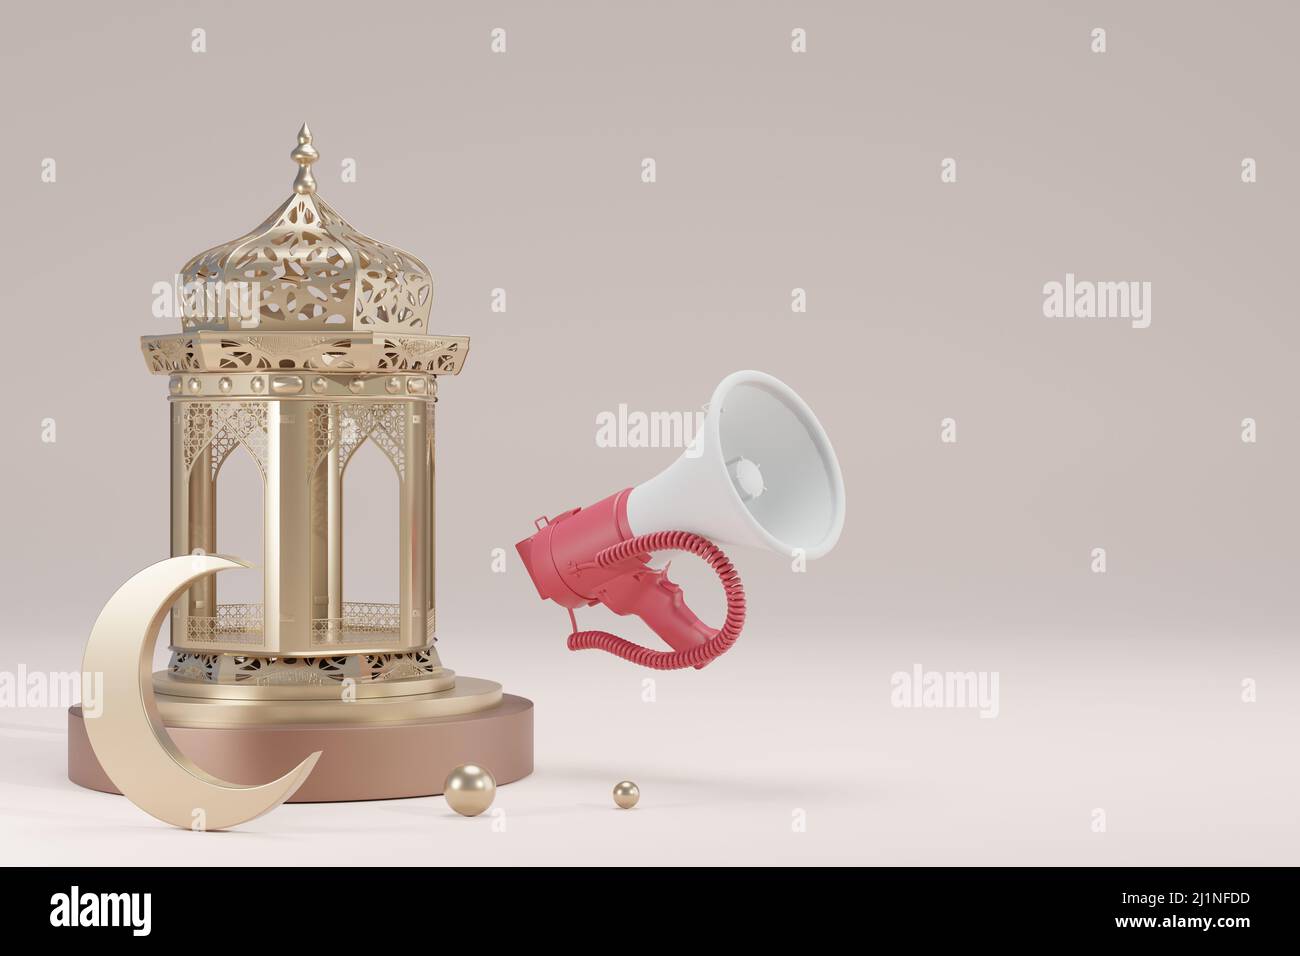 Islamic background, Gift box, lantern, gold crescent moon on white. Design concept of ramadan kareem, mawlid, iftar,isra and miraj or eid al fitr adha Stock Photo